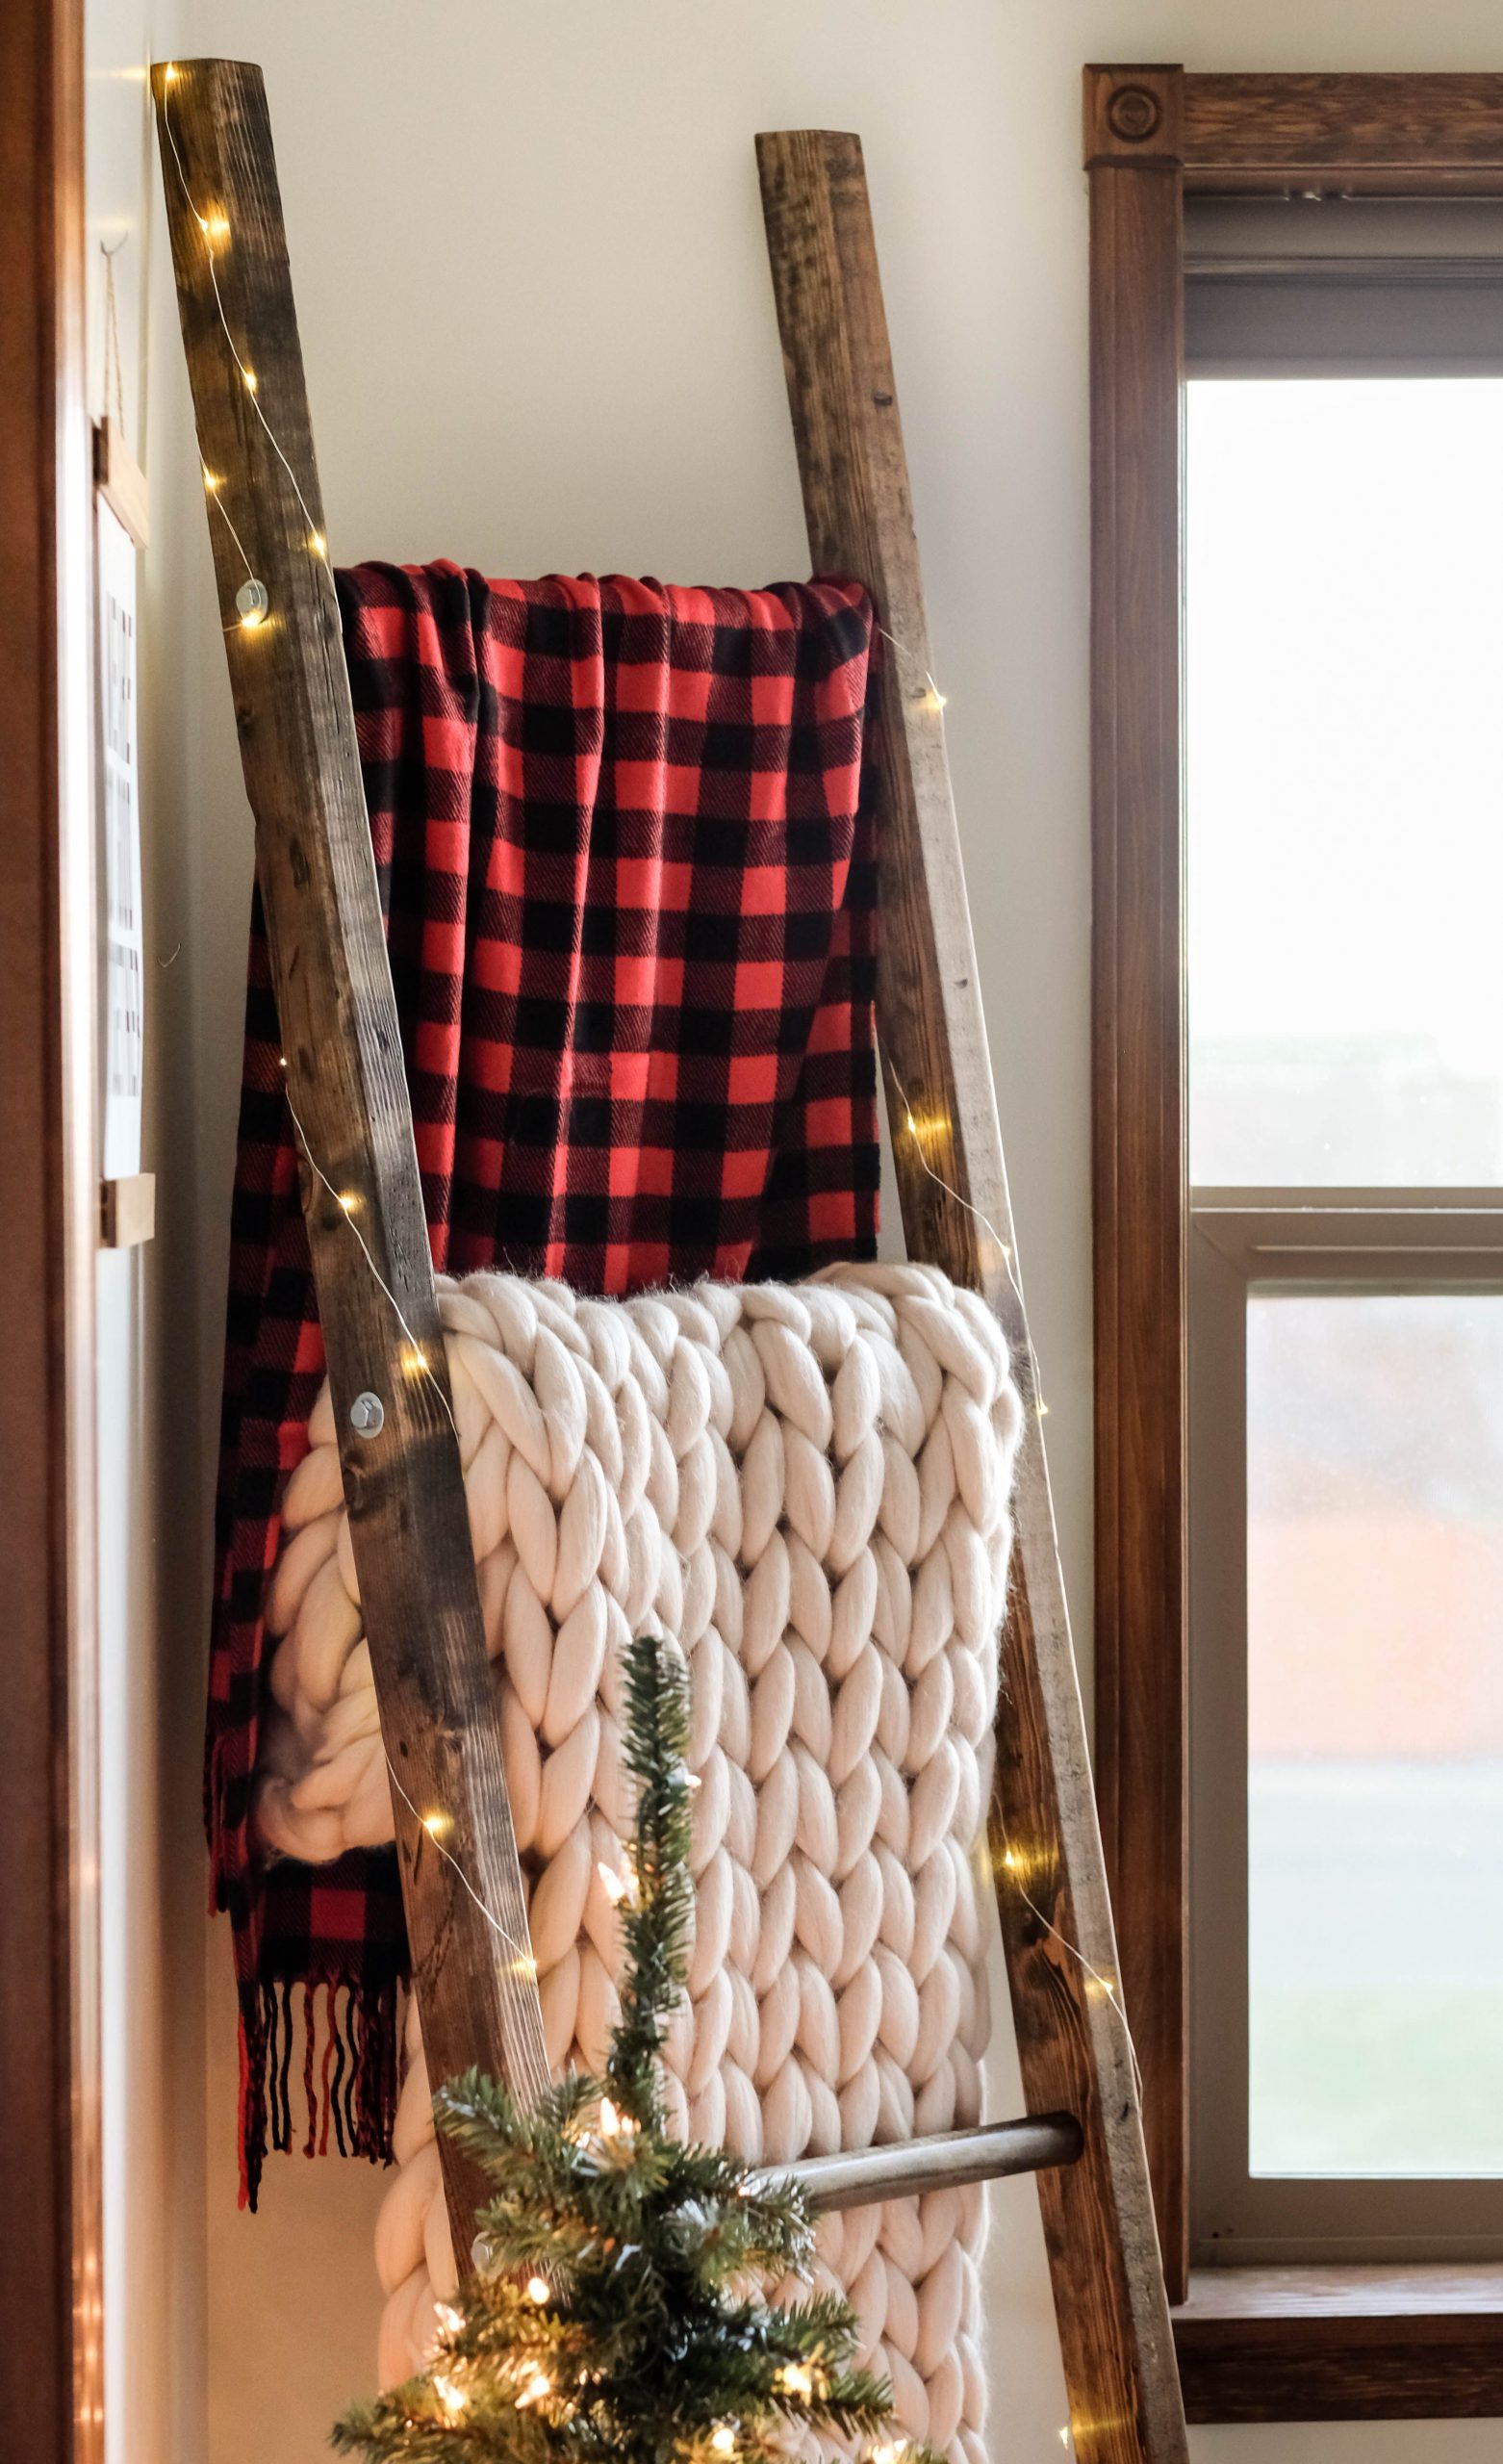 Easy DIY Blanket Ladder Plans | Easy Step-By-Step Guide | Under $15!